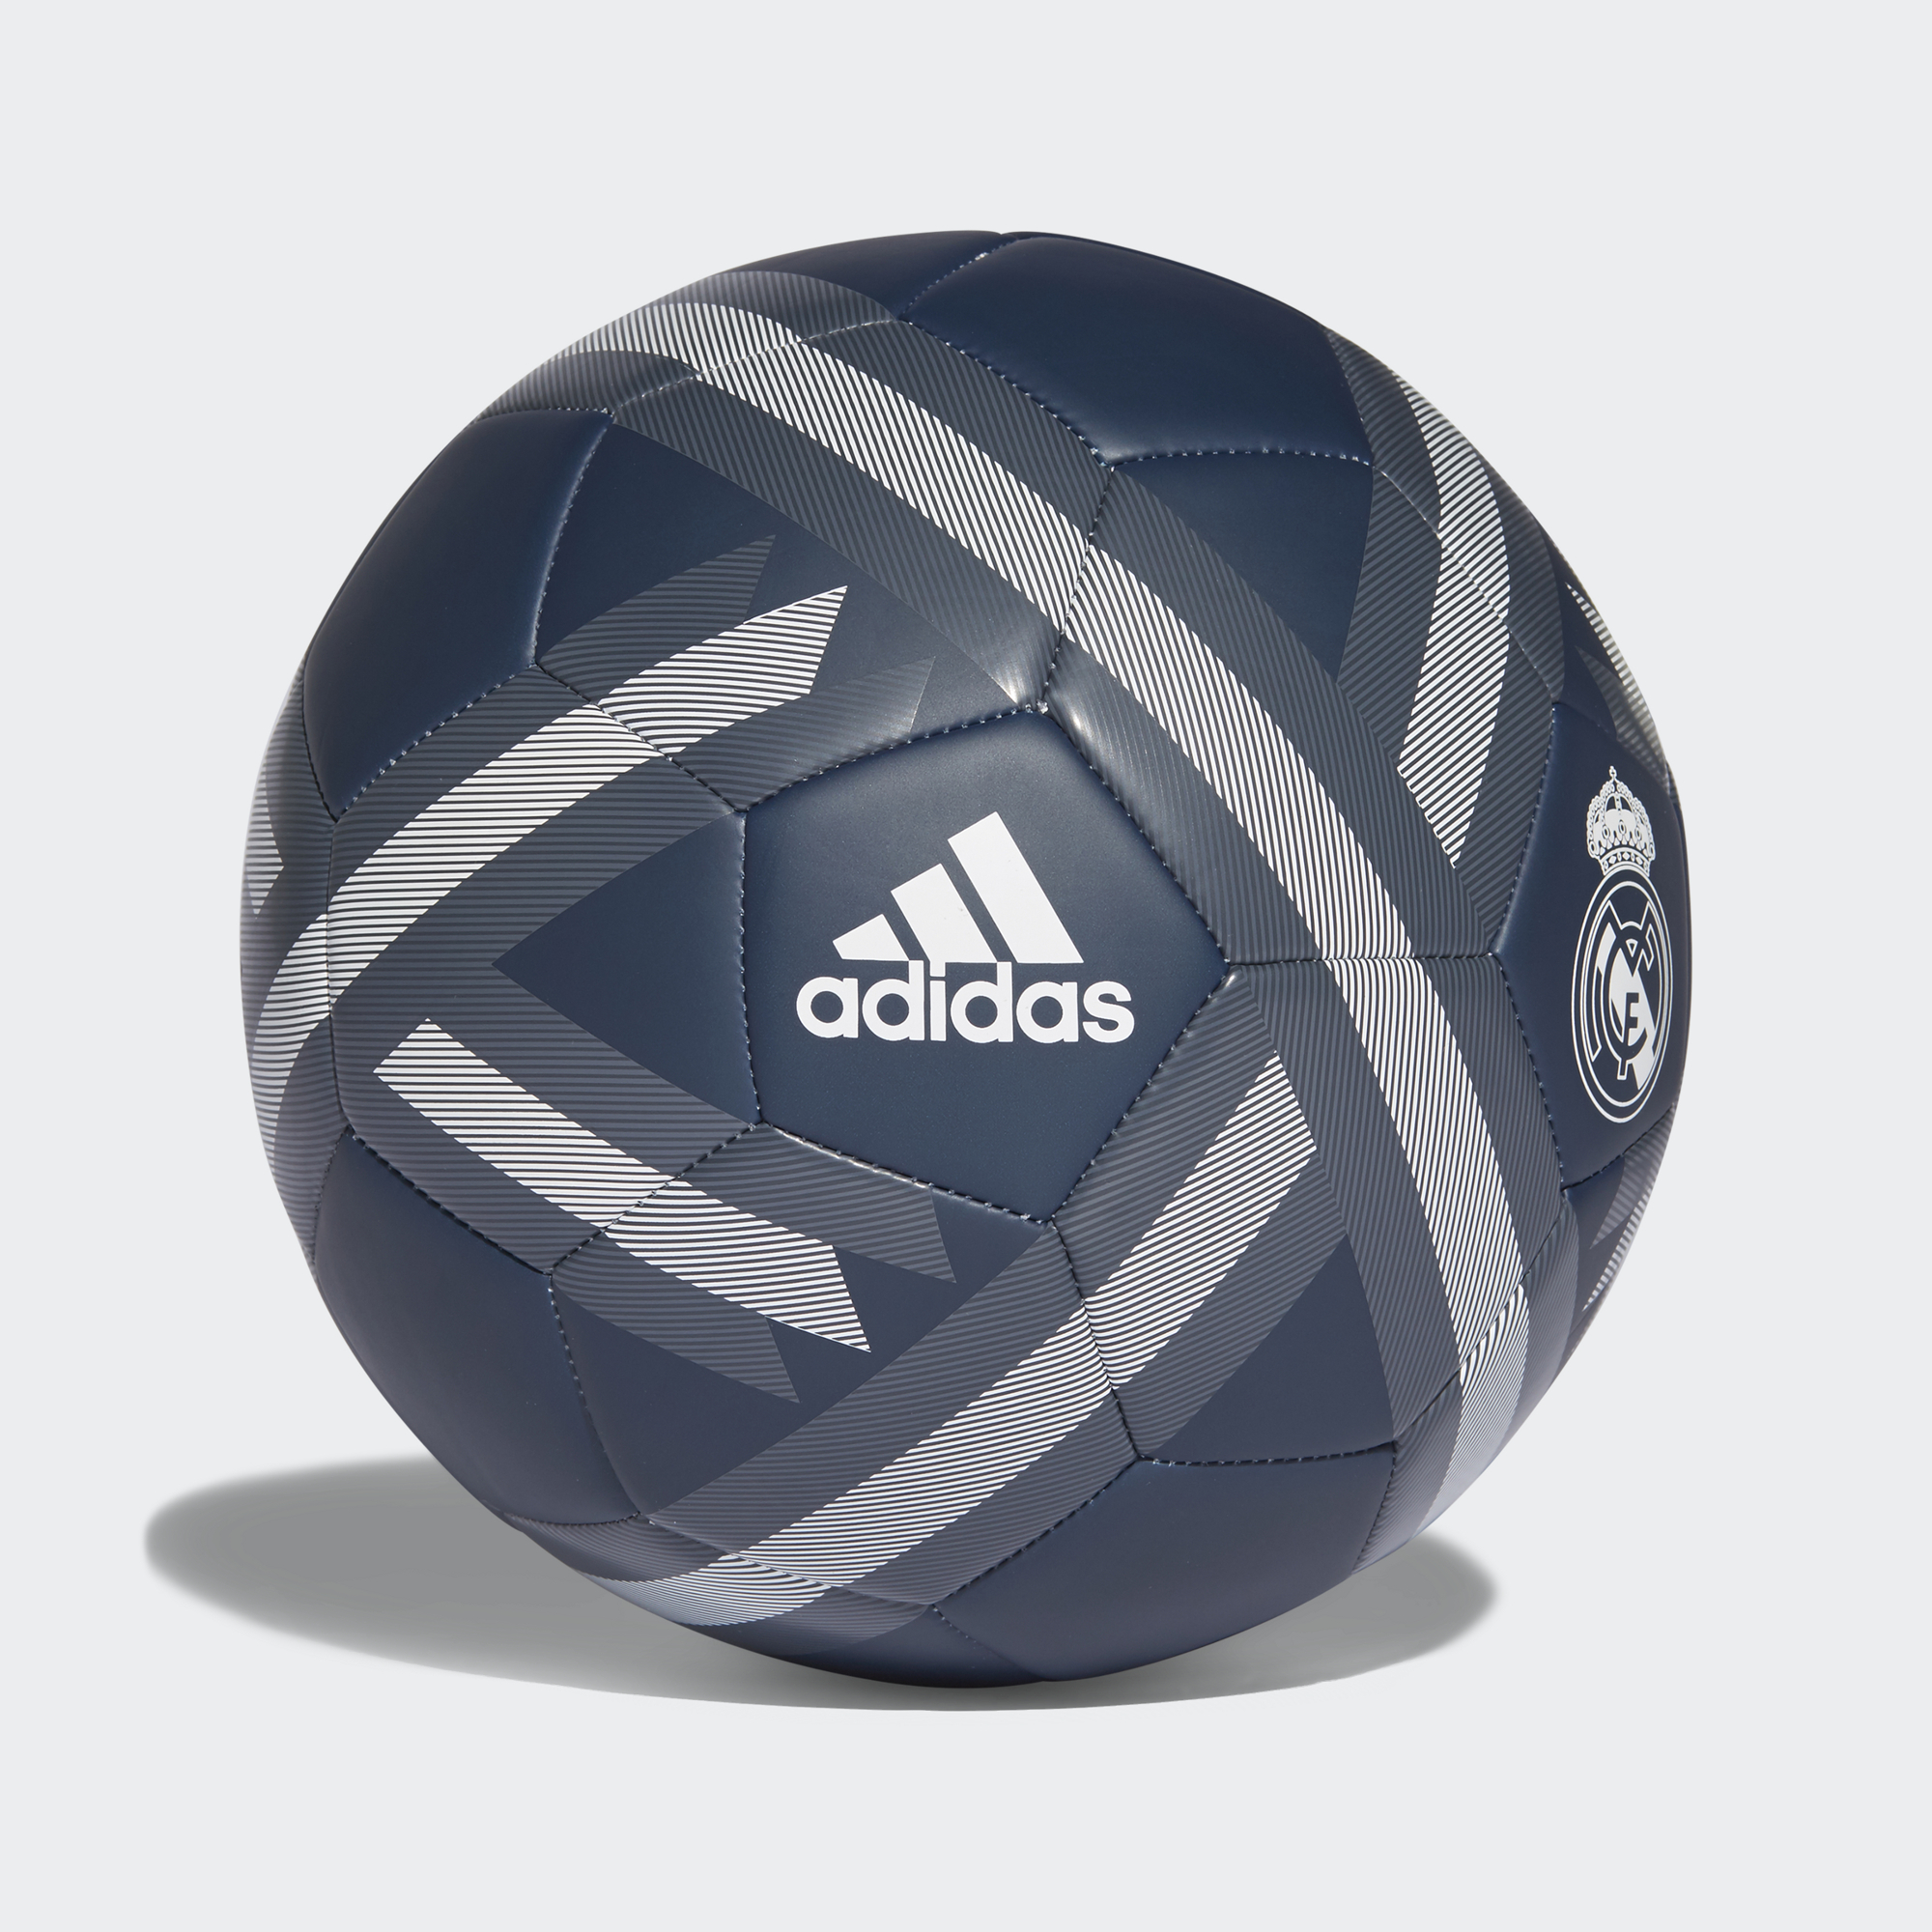 adidas CW4157 Real Madrid Freizeitball in Gr. 5 bei sport-boecker.de